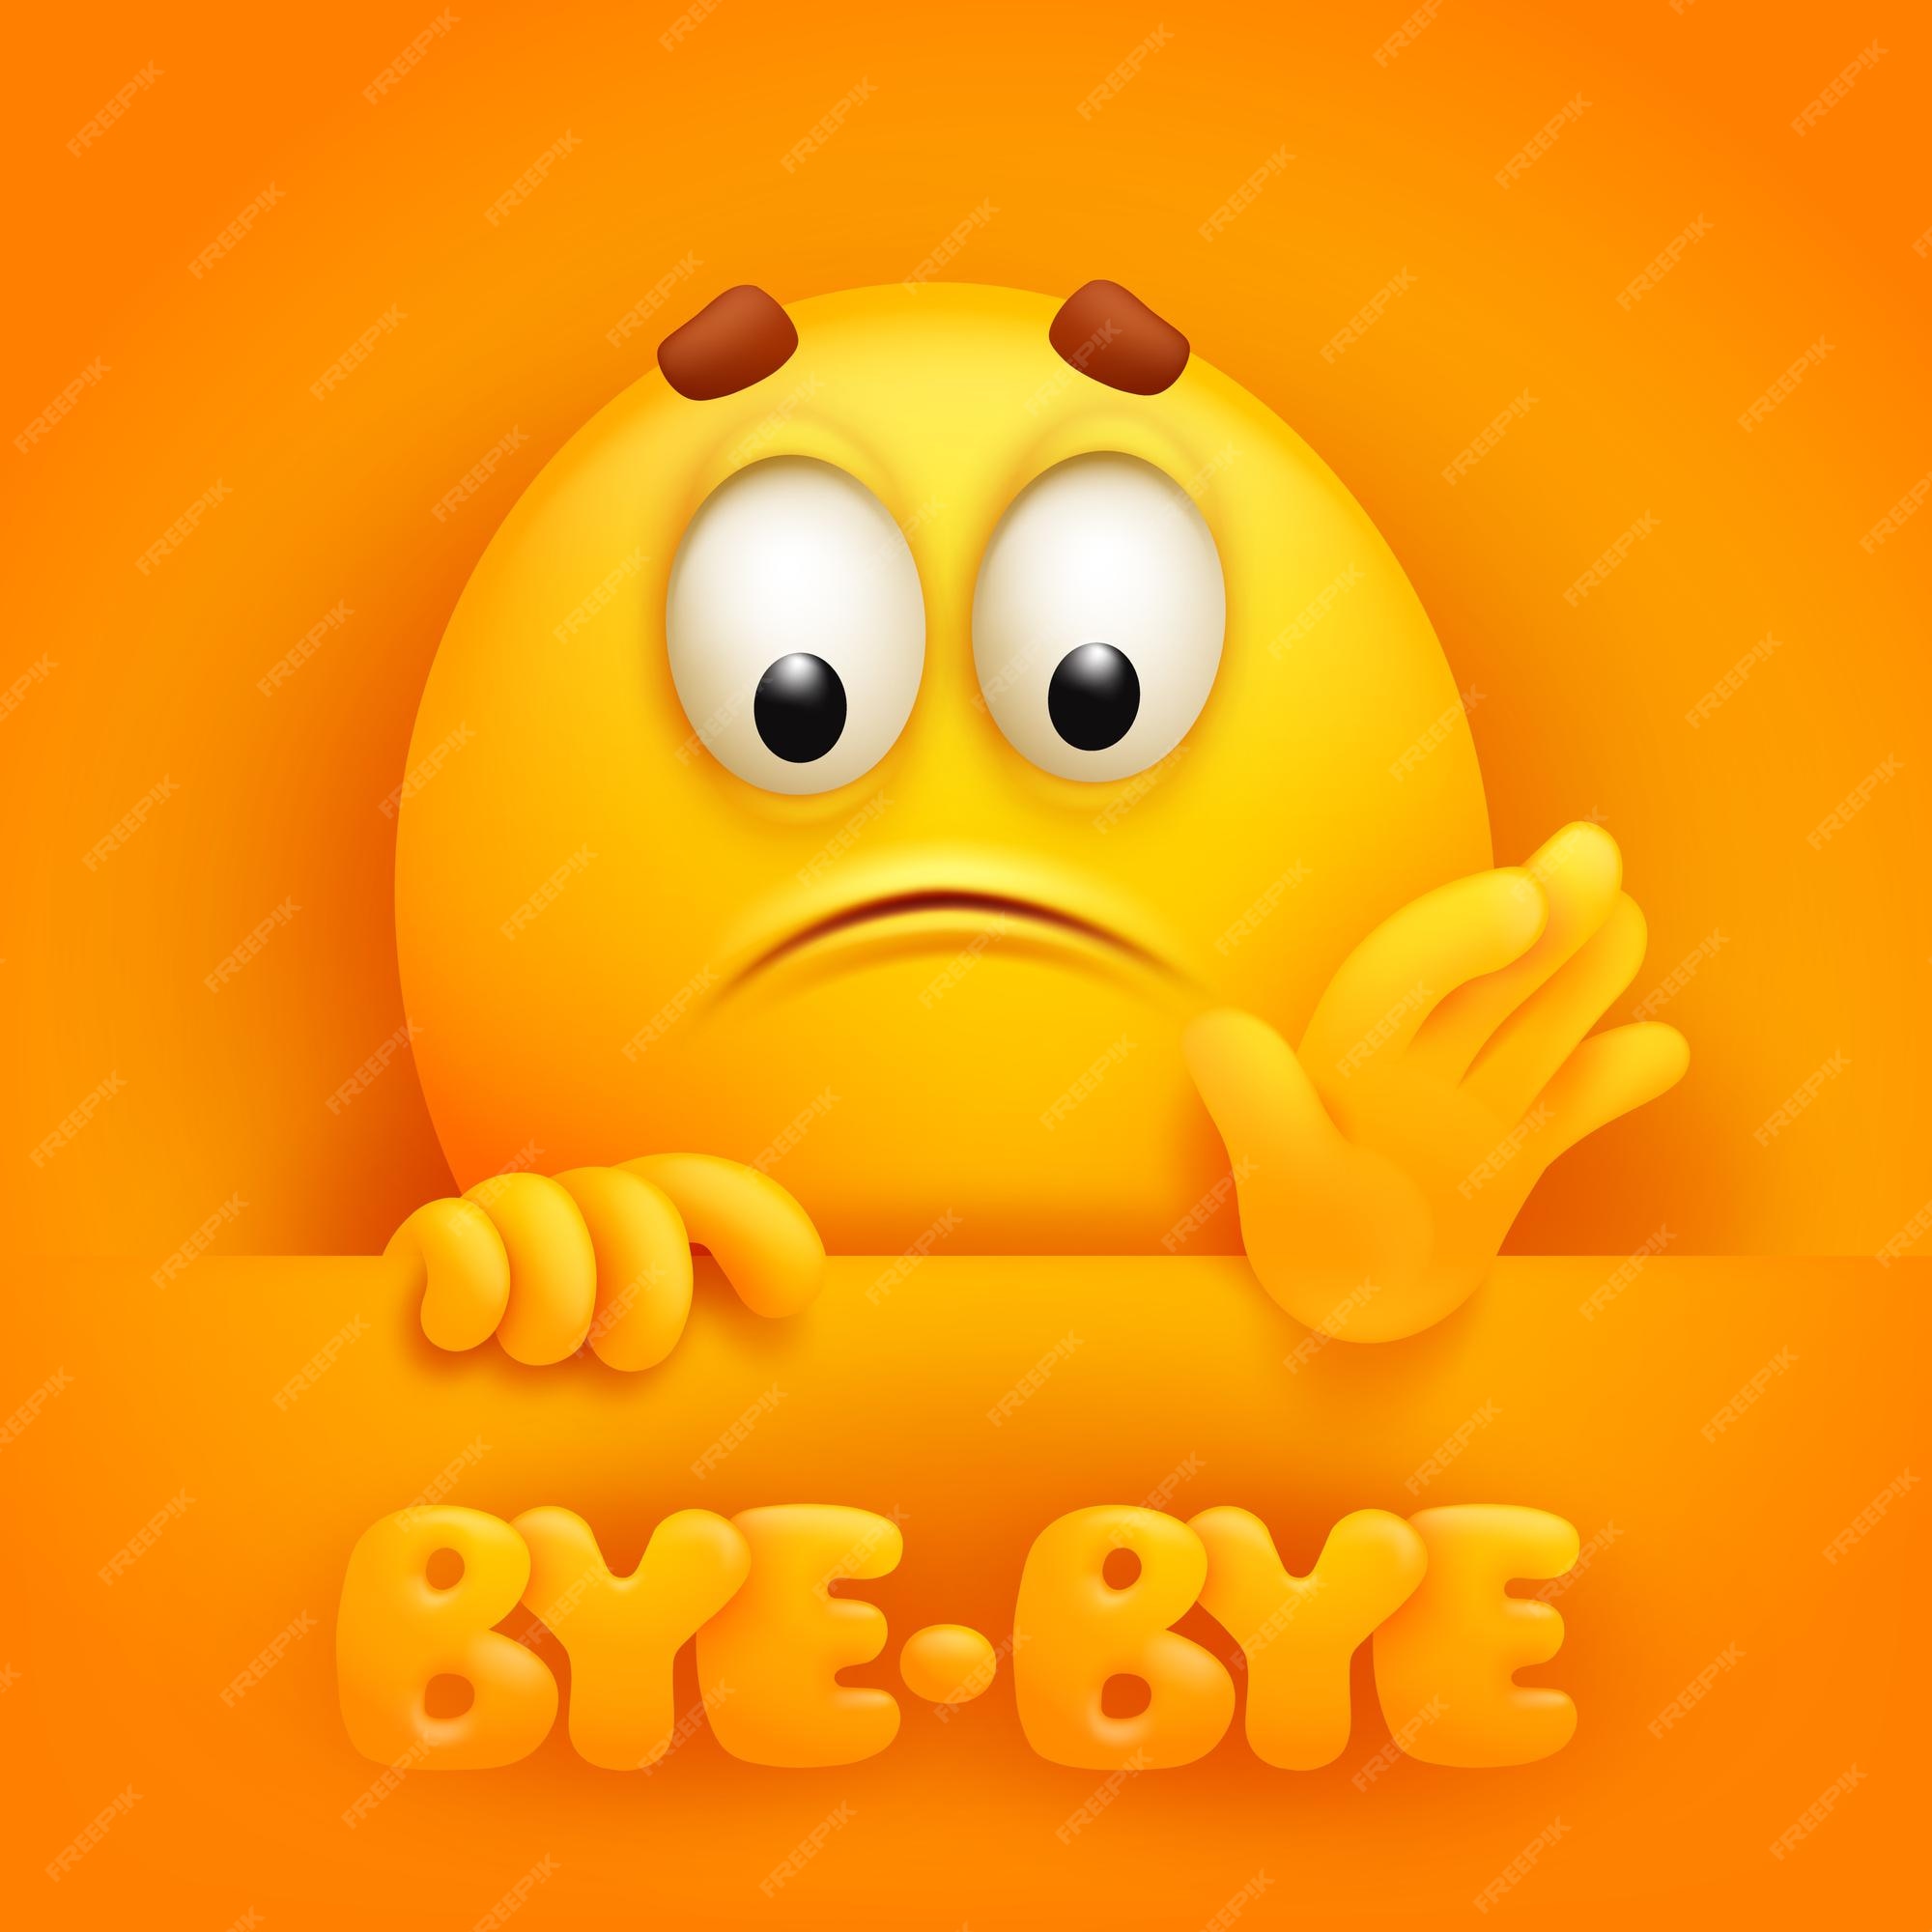 Bye-bye. cute emoji cartoon character on yellow backround. | Download on  Freepik